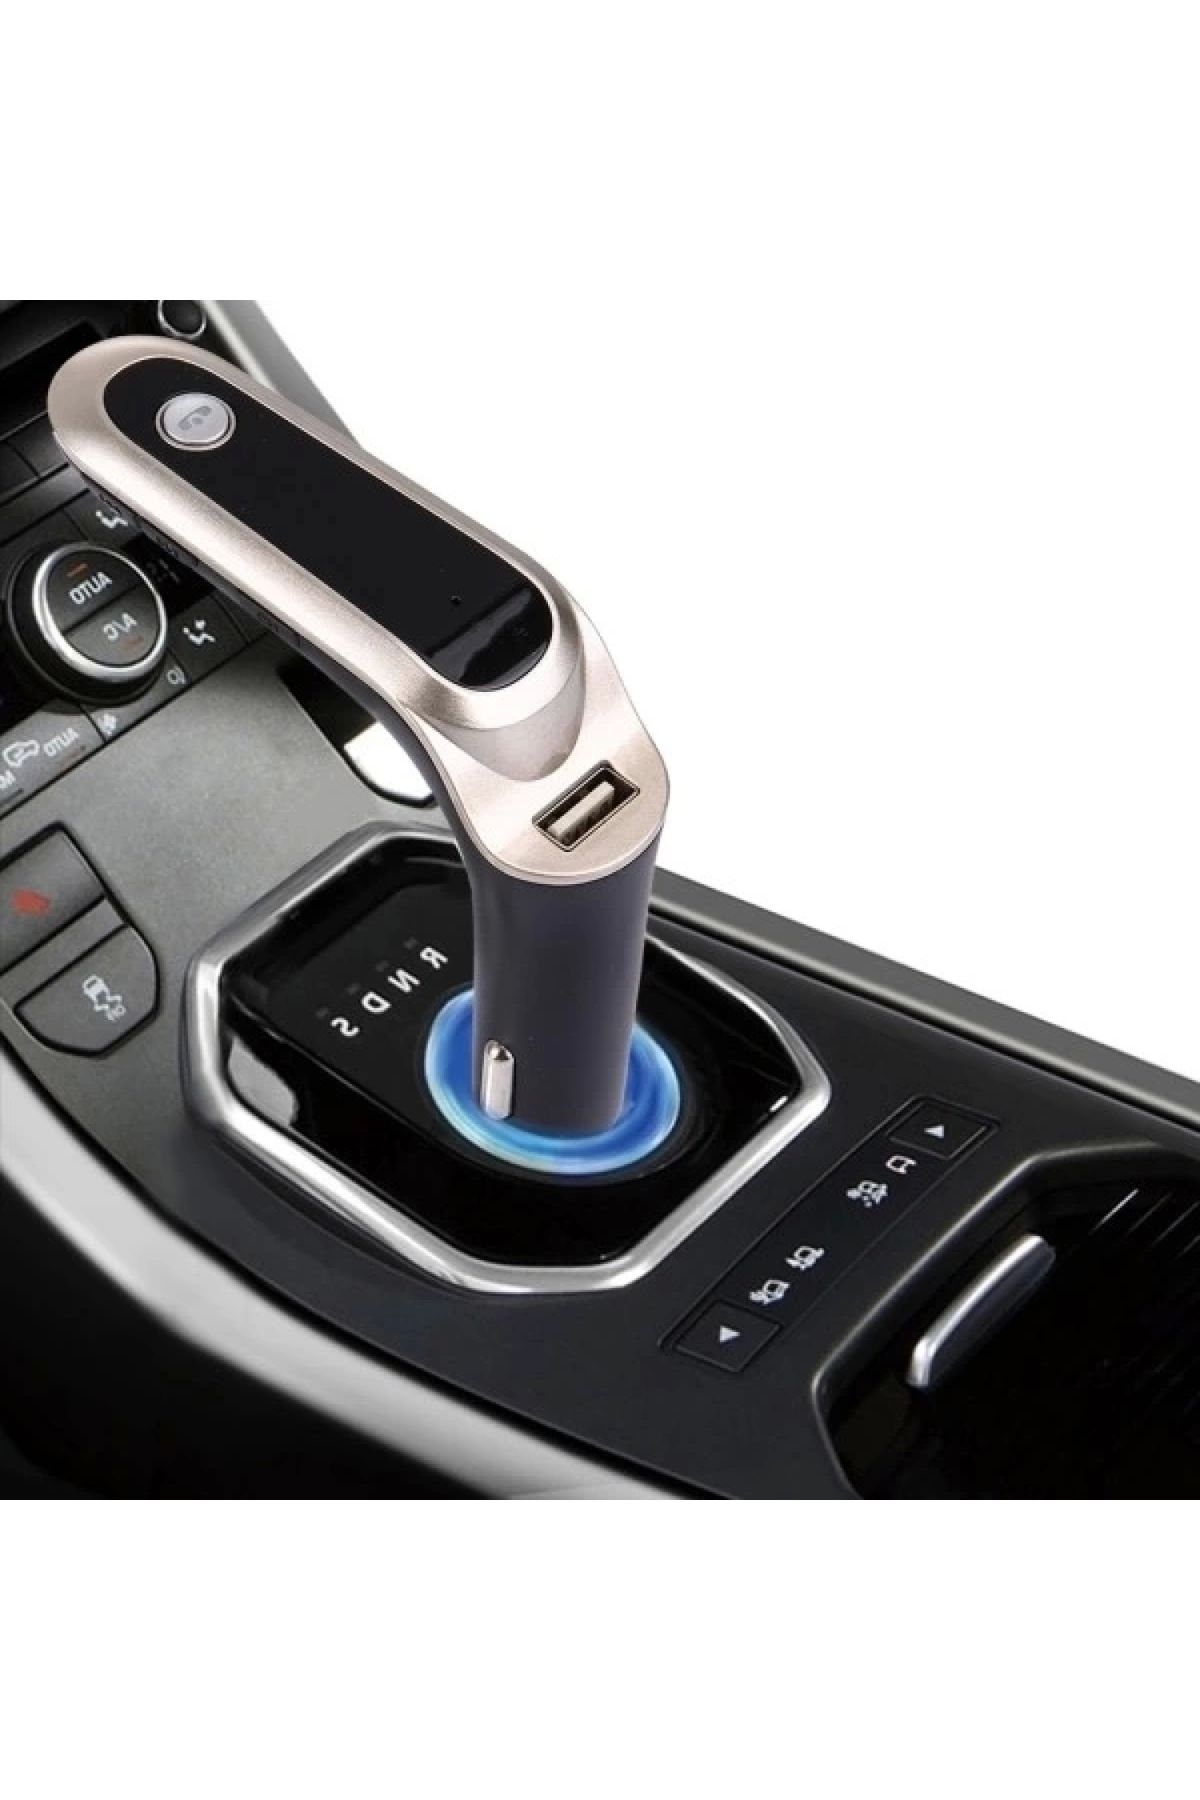 Narnuga Cars7 Bluetooth Hafıza Kart Girişli 4.0 Araç Kiti Çakmaklık Mp3 Fm Transmitter